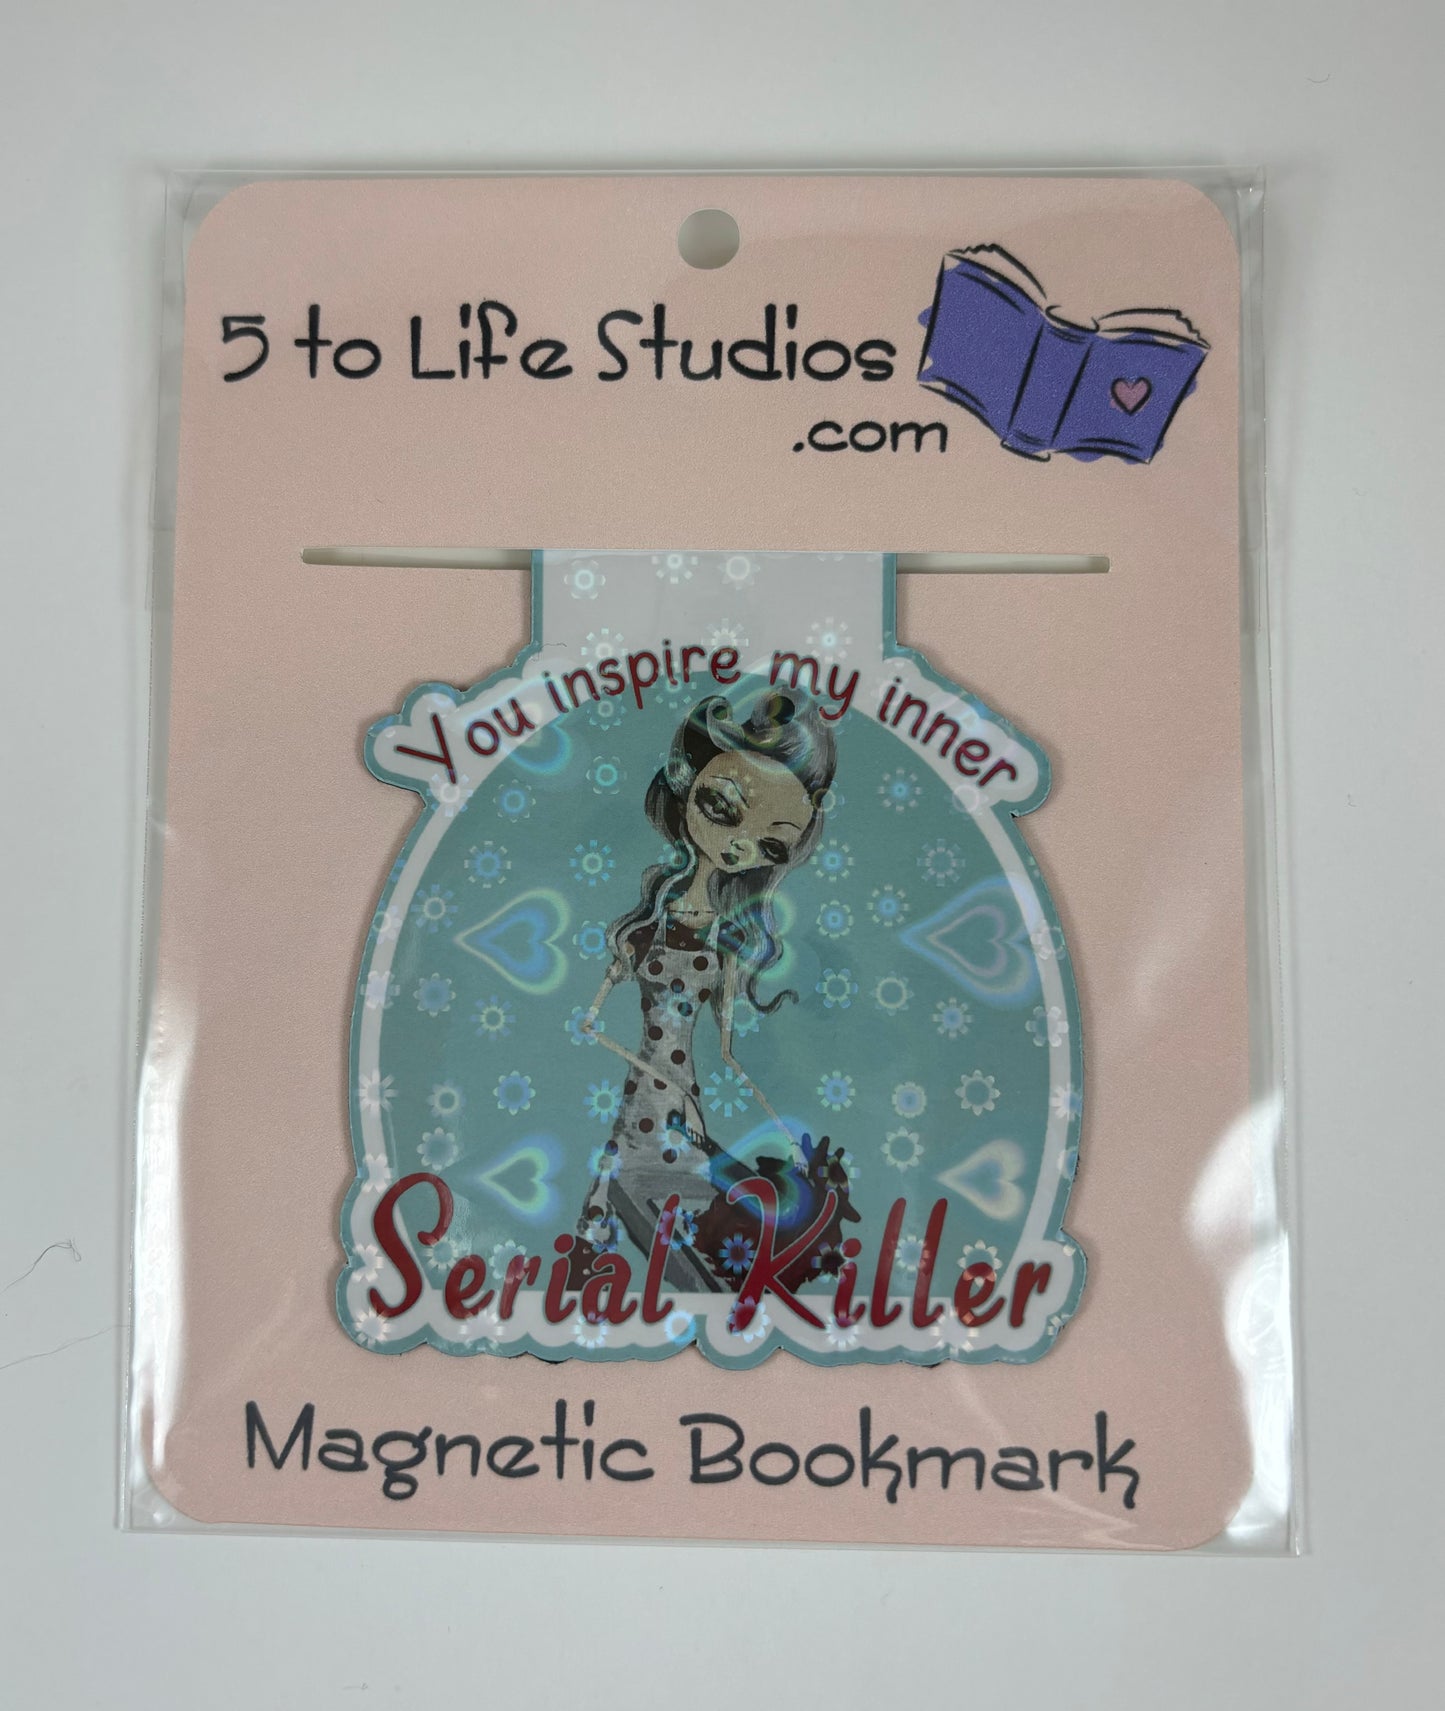 Slimclick Magnetic Bookmark "You inspire my inner serial killer'"